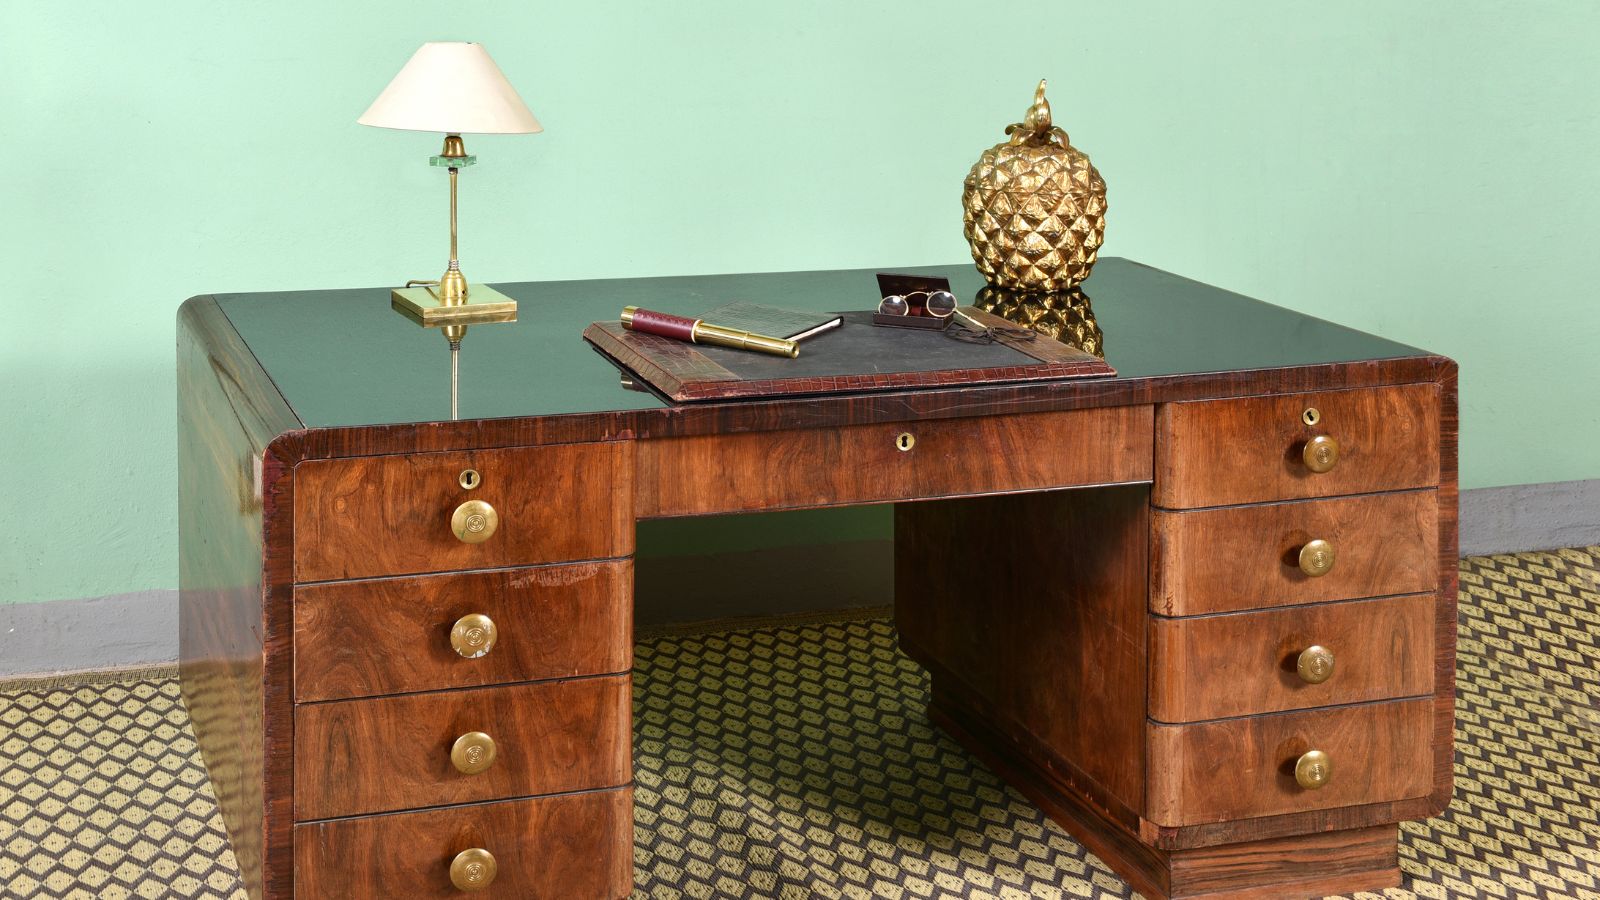 A traditional desk made of mahogany wood